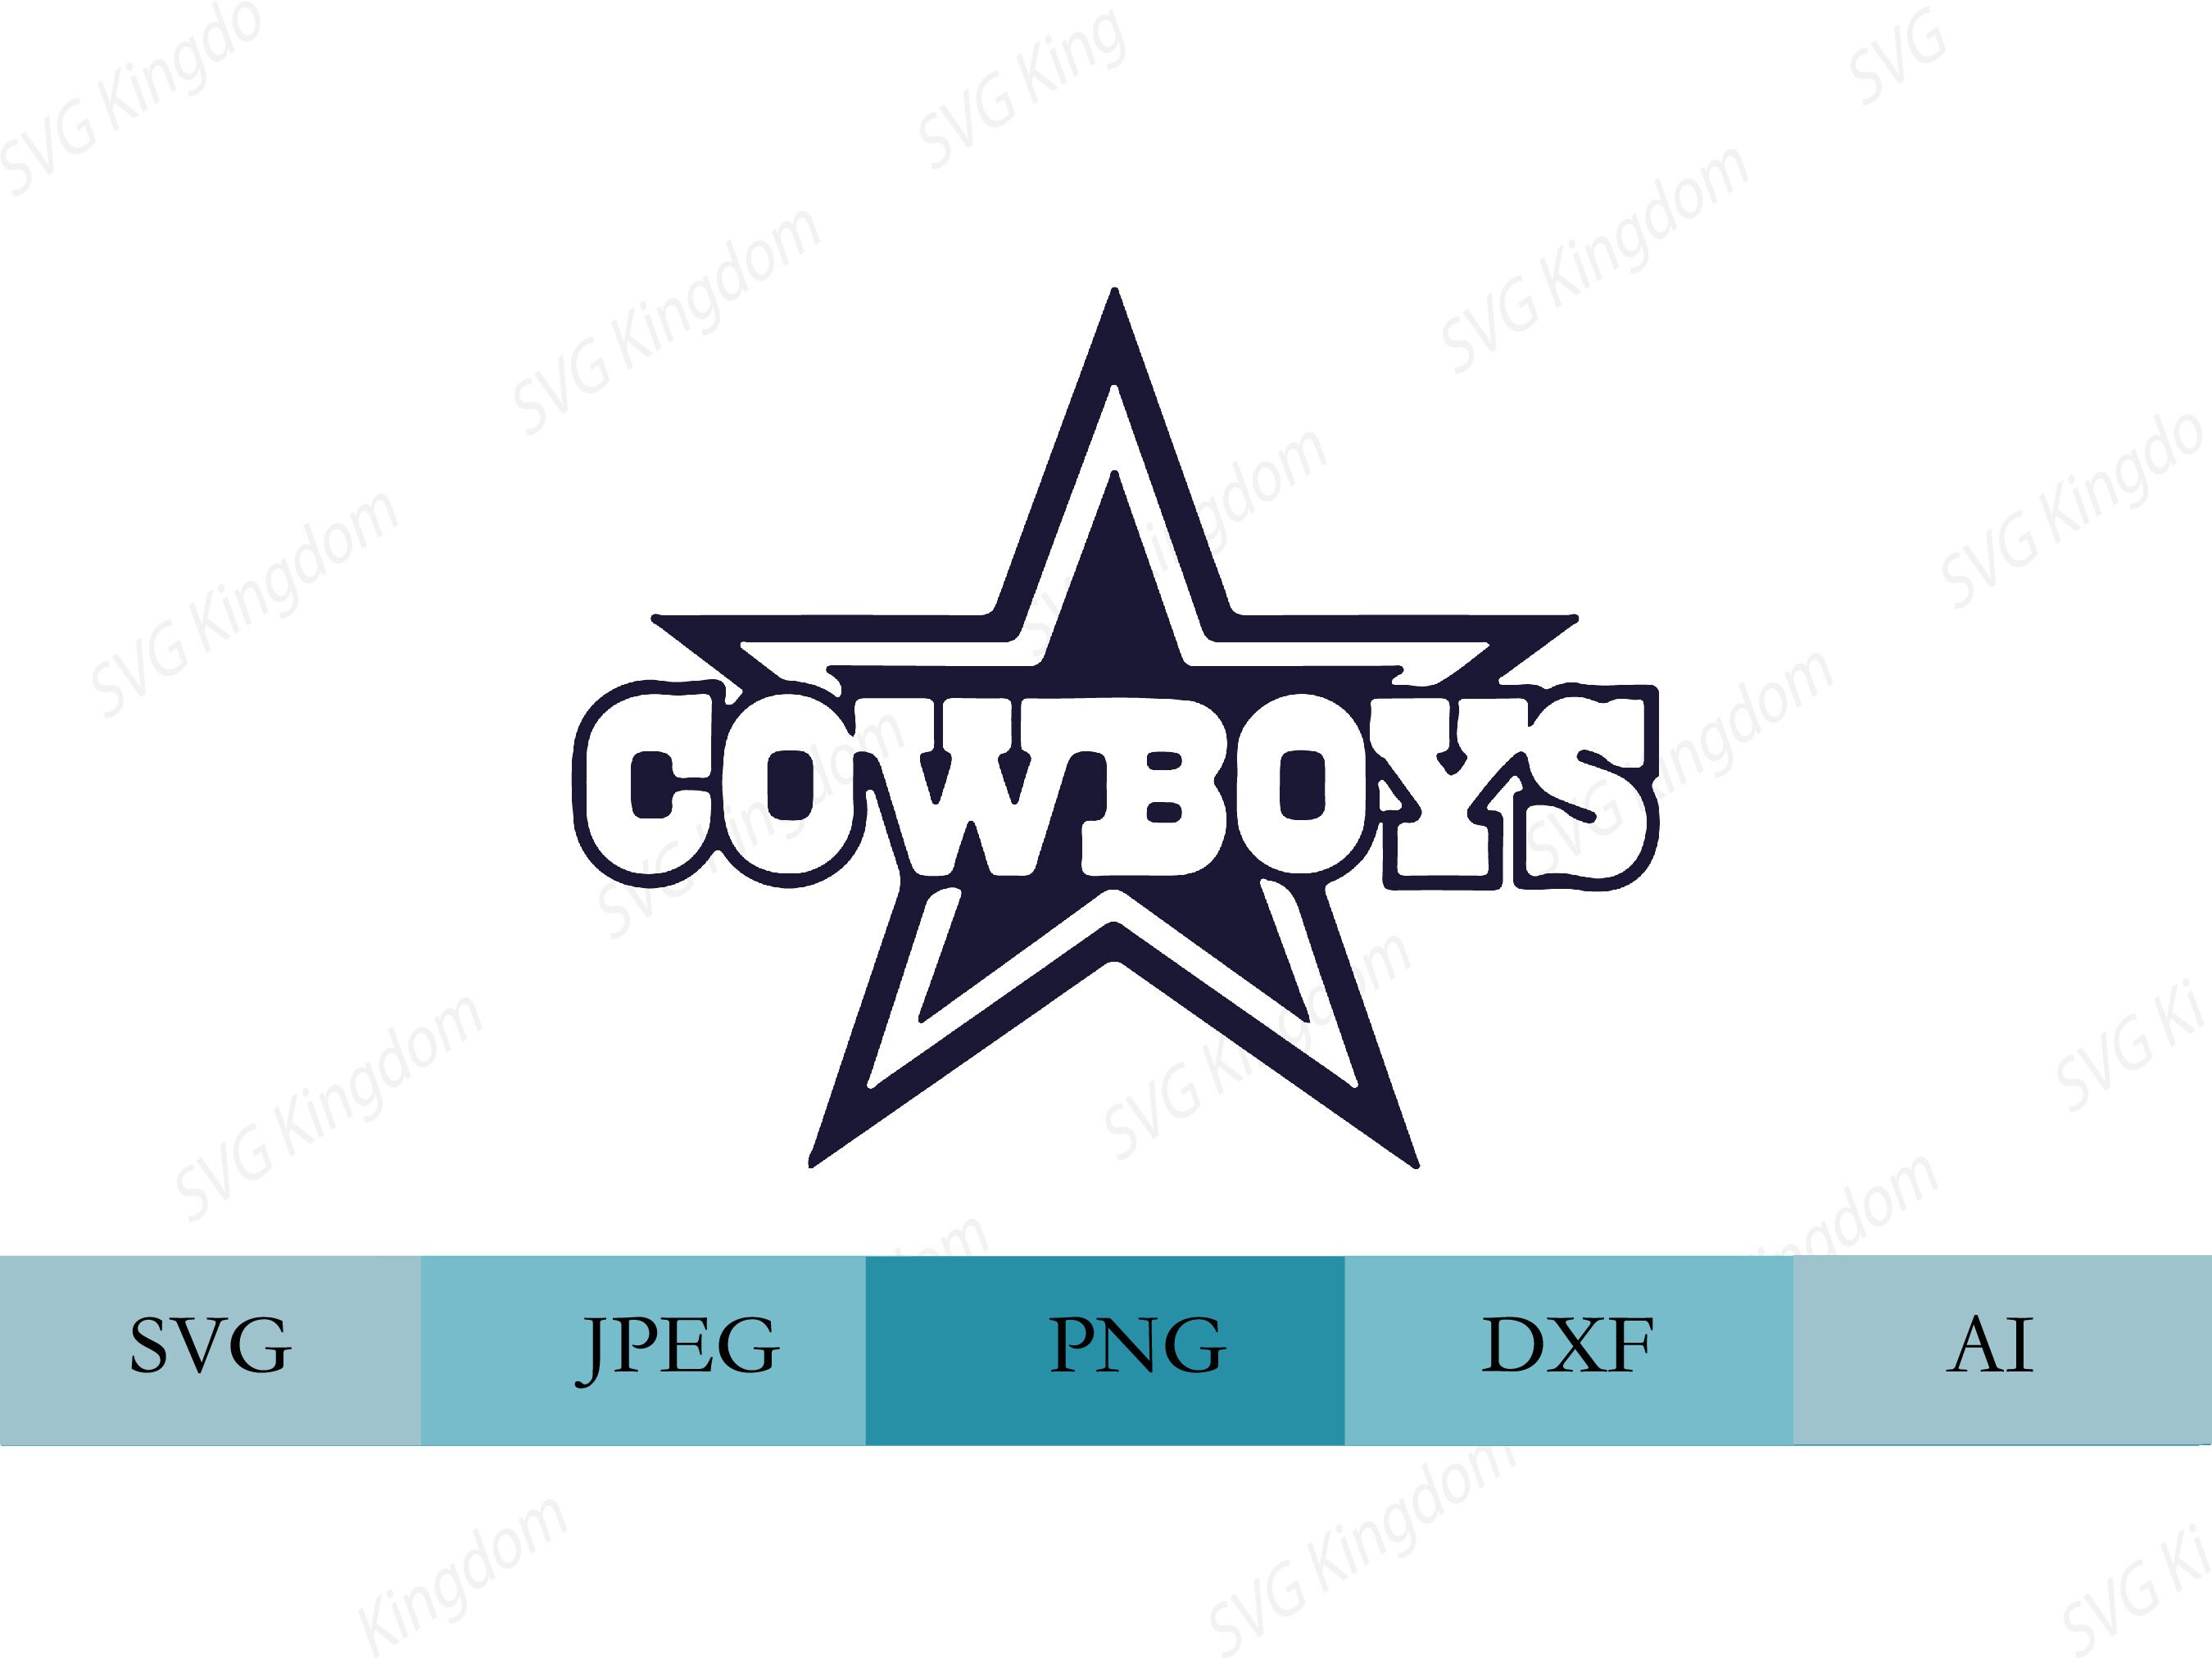 Dallas Cowboys SVG PNG JPEG vector Image Instant download | Etsy